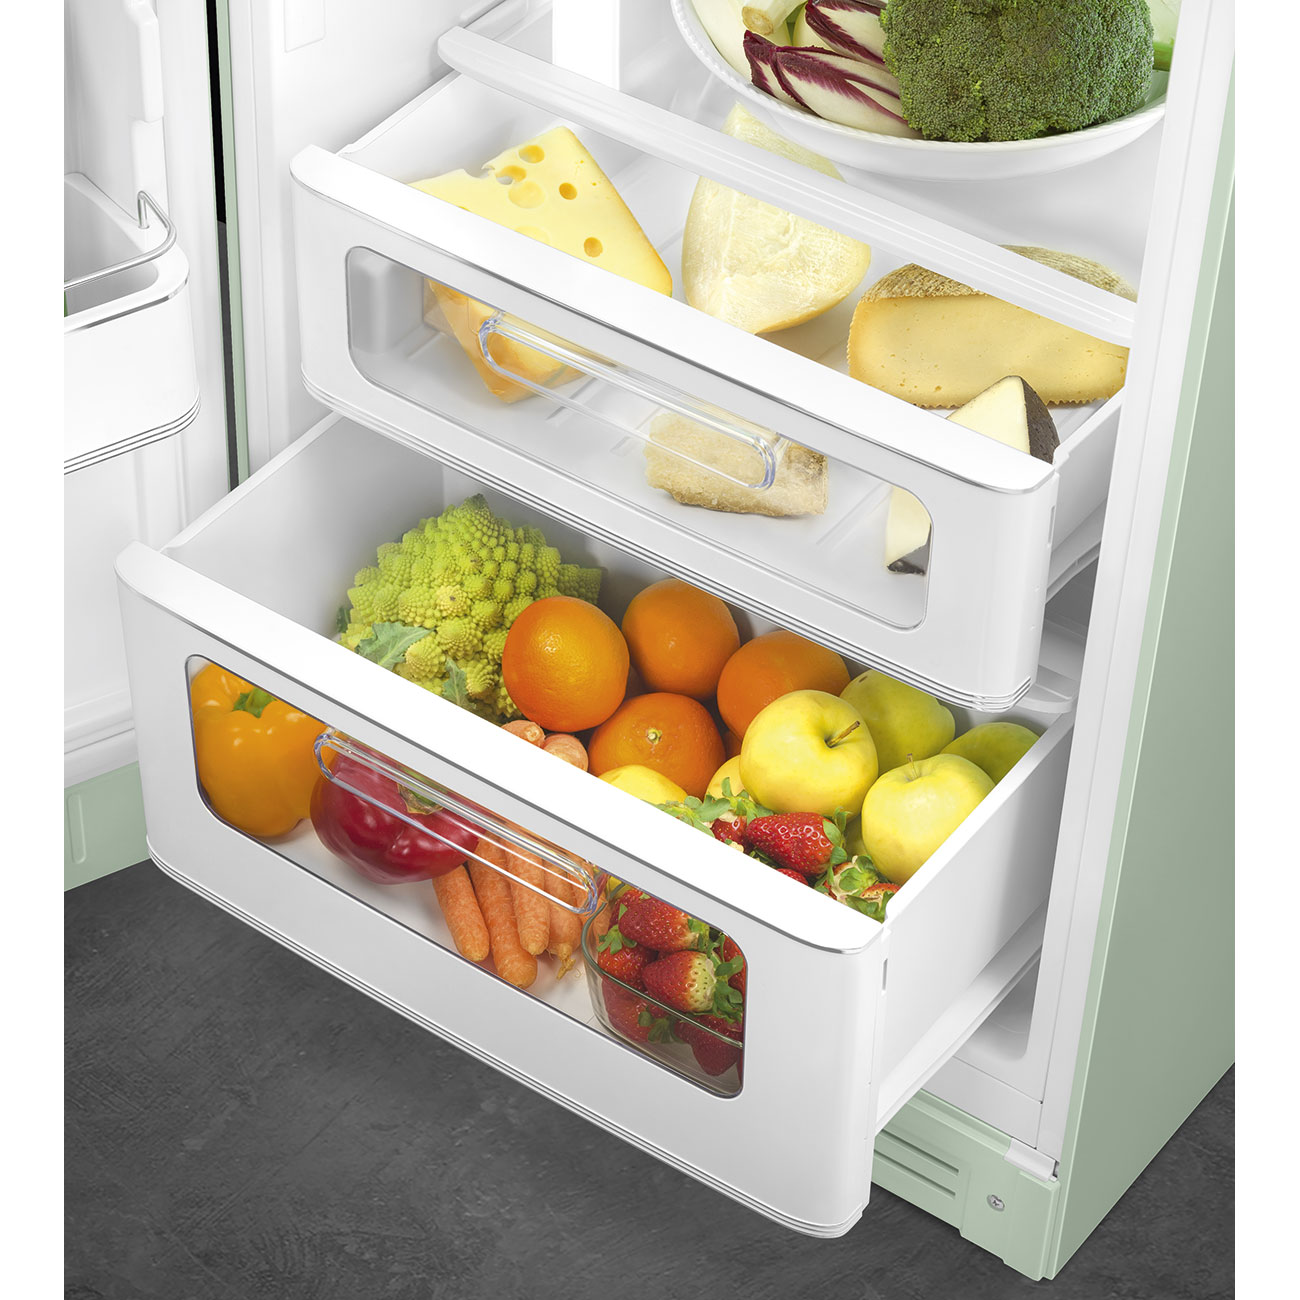 Pastel green refrigerator - Smeg_7